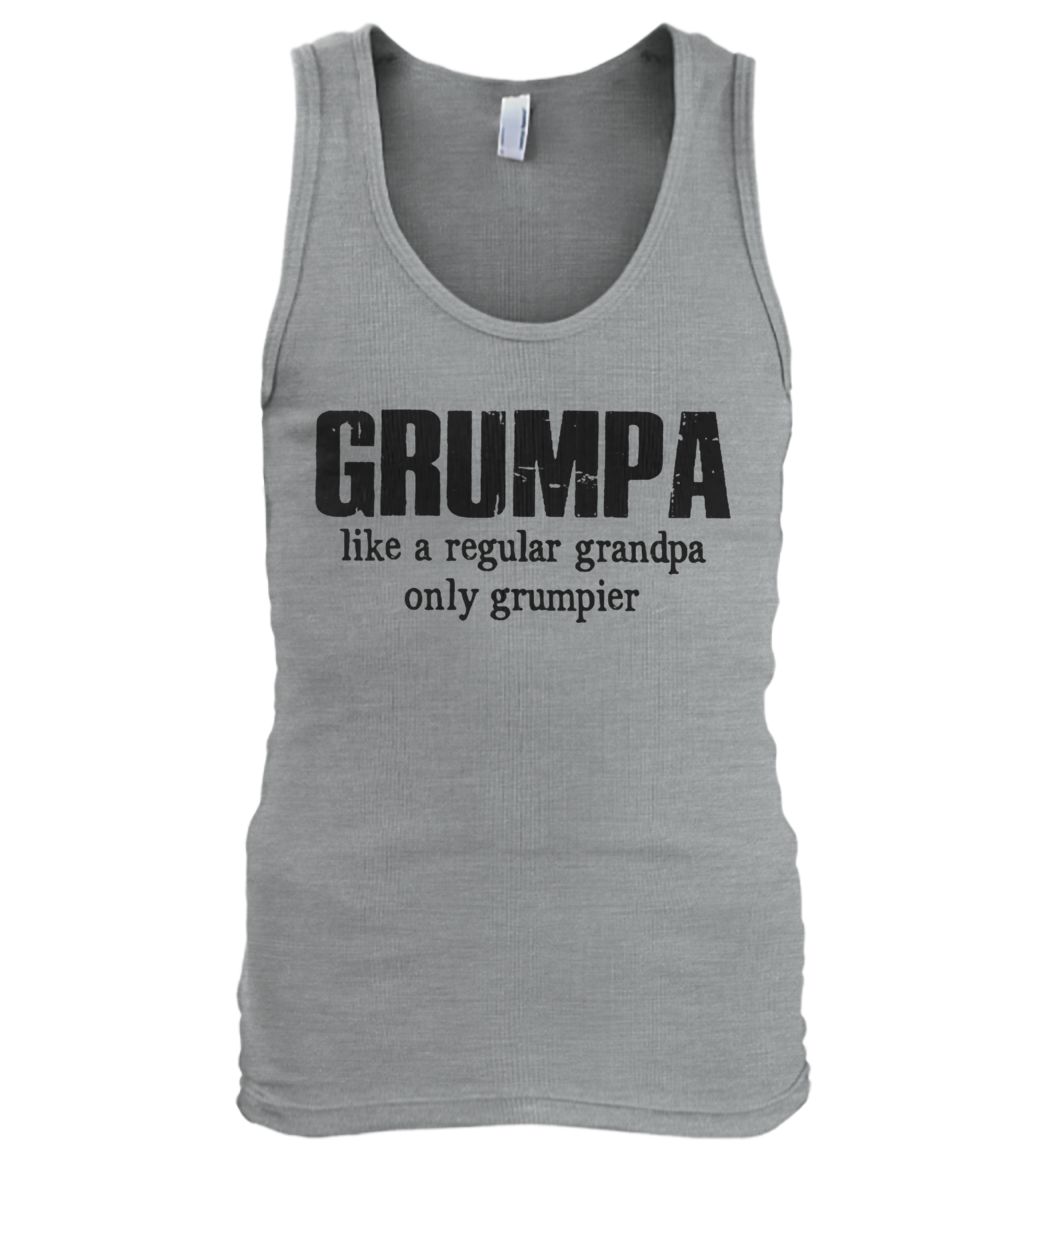 Grumpa like a regular grandpa only grumpier men's tank top